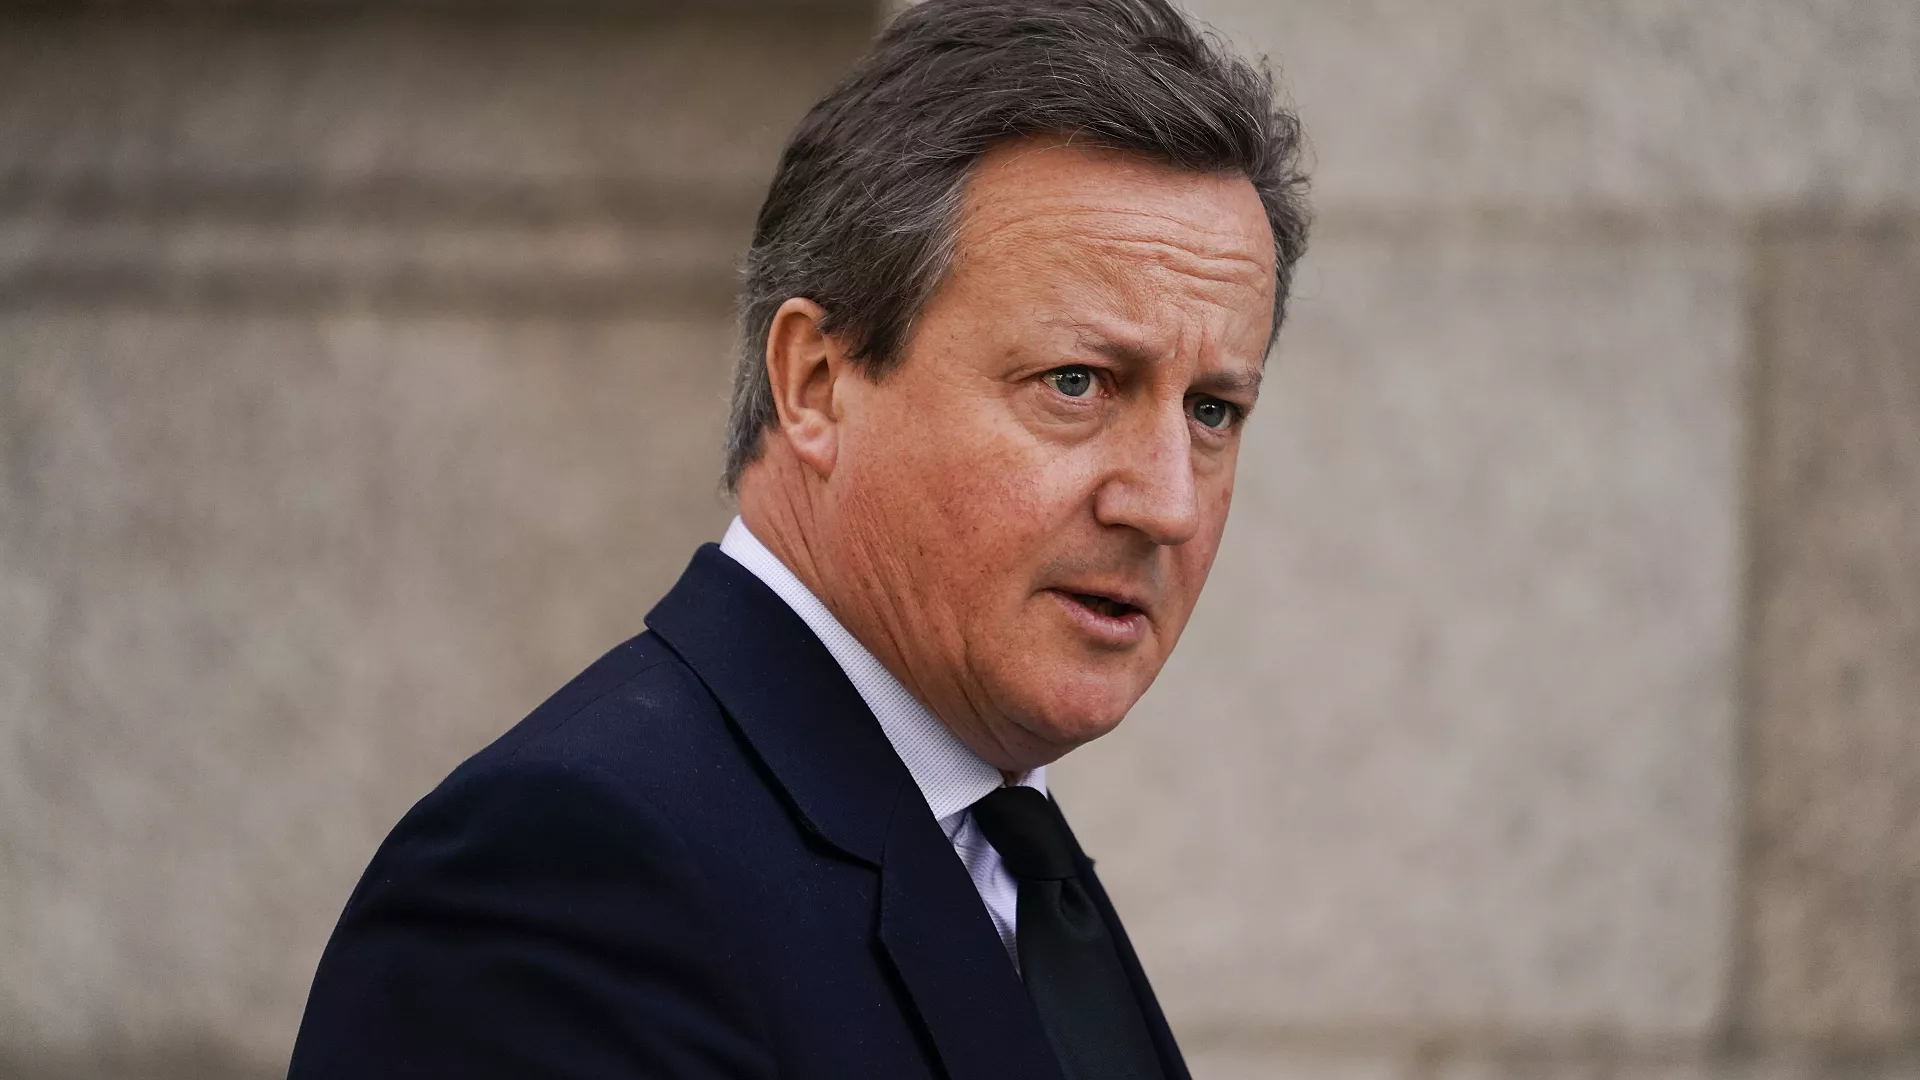 David Cameron says Iran is 'malign influence' and global threat